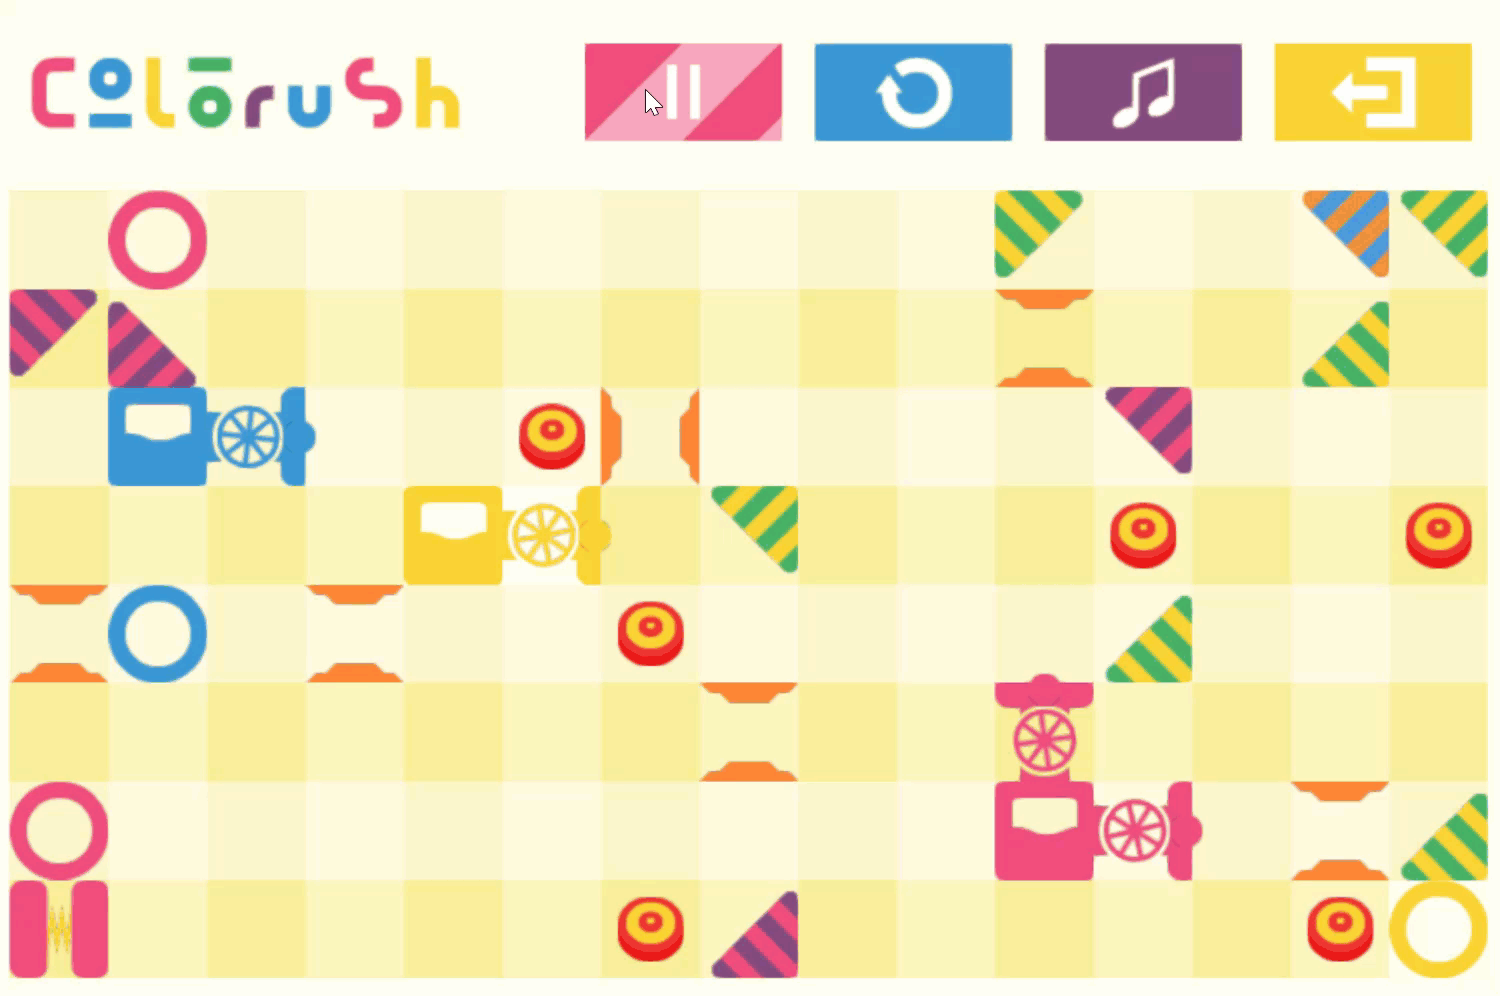 Colorush Game Level 25 Screenshot.